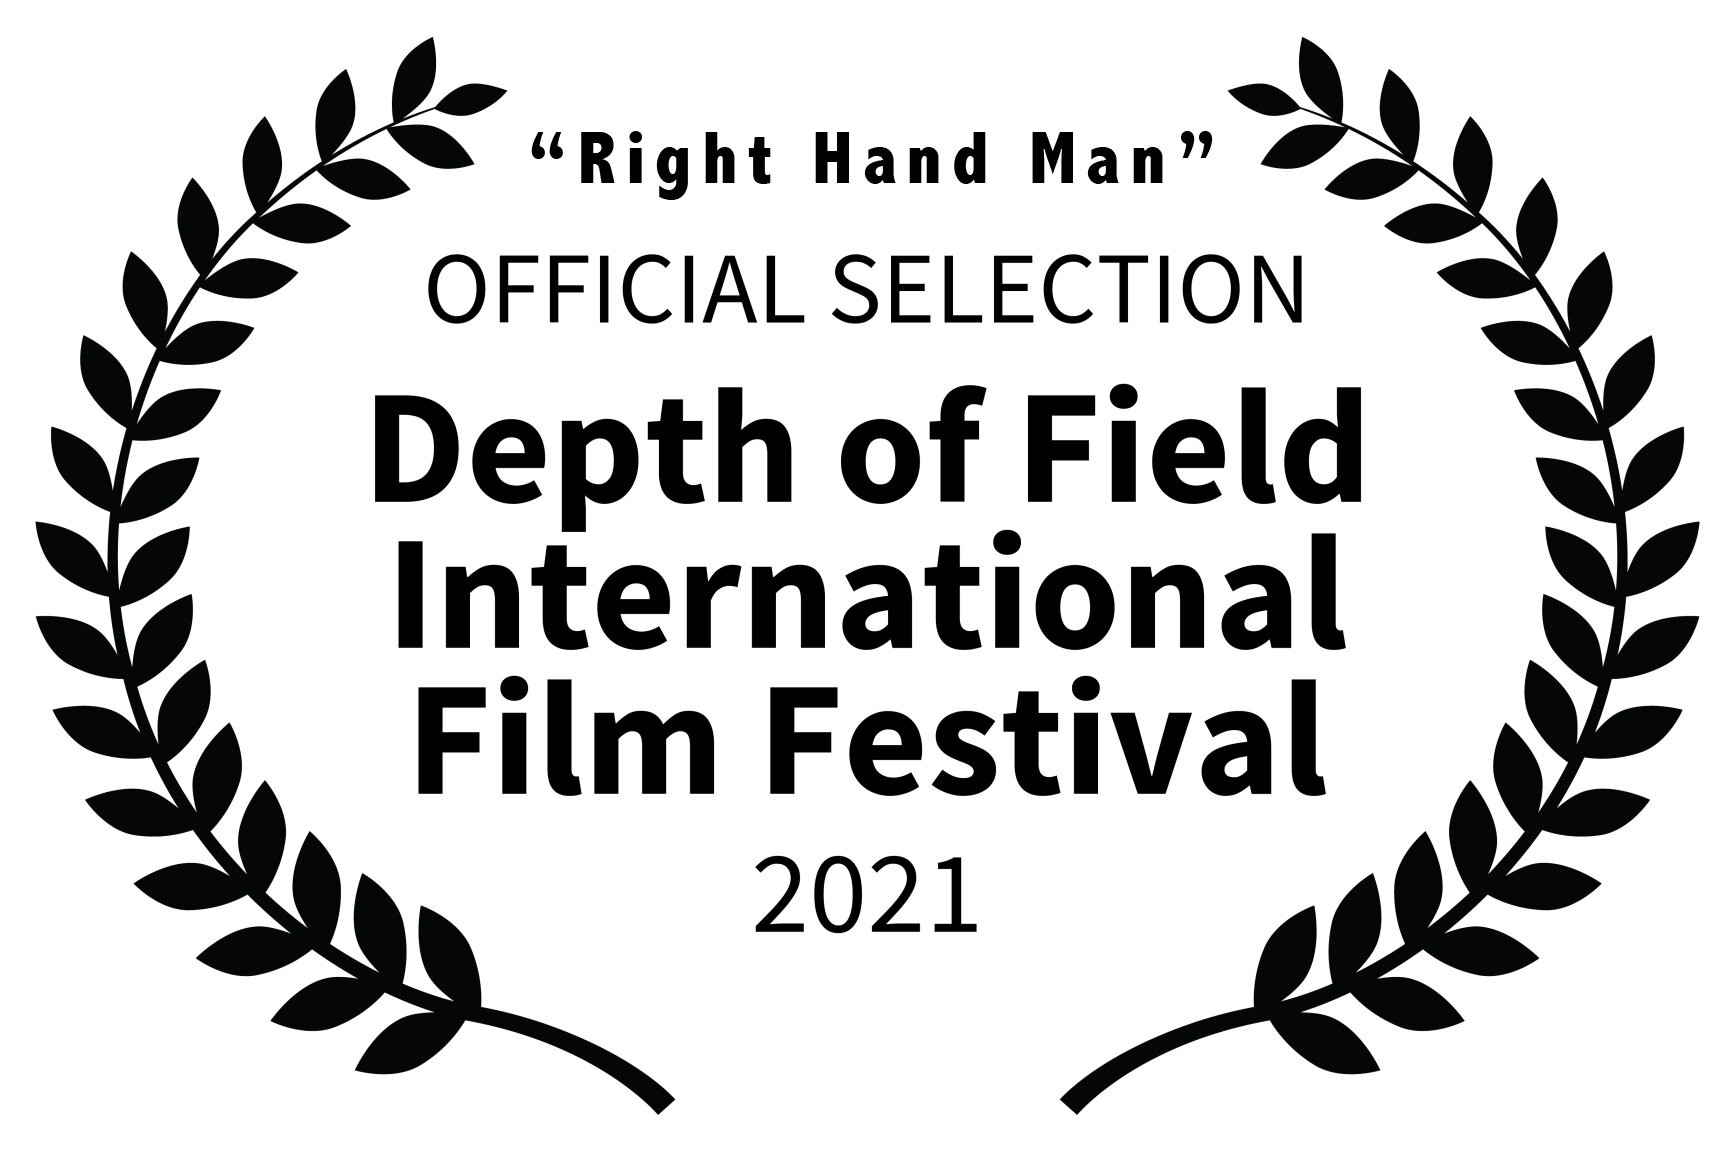 OFFICIAL SELECTION RHM - Depth of Field International Film Festival - 2021.jpg